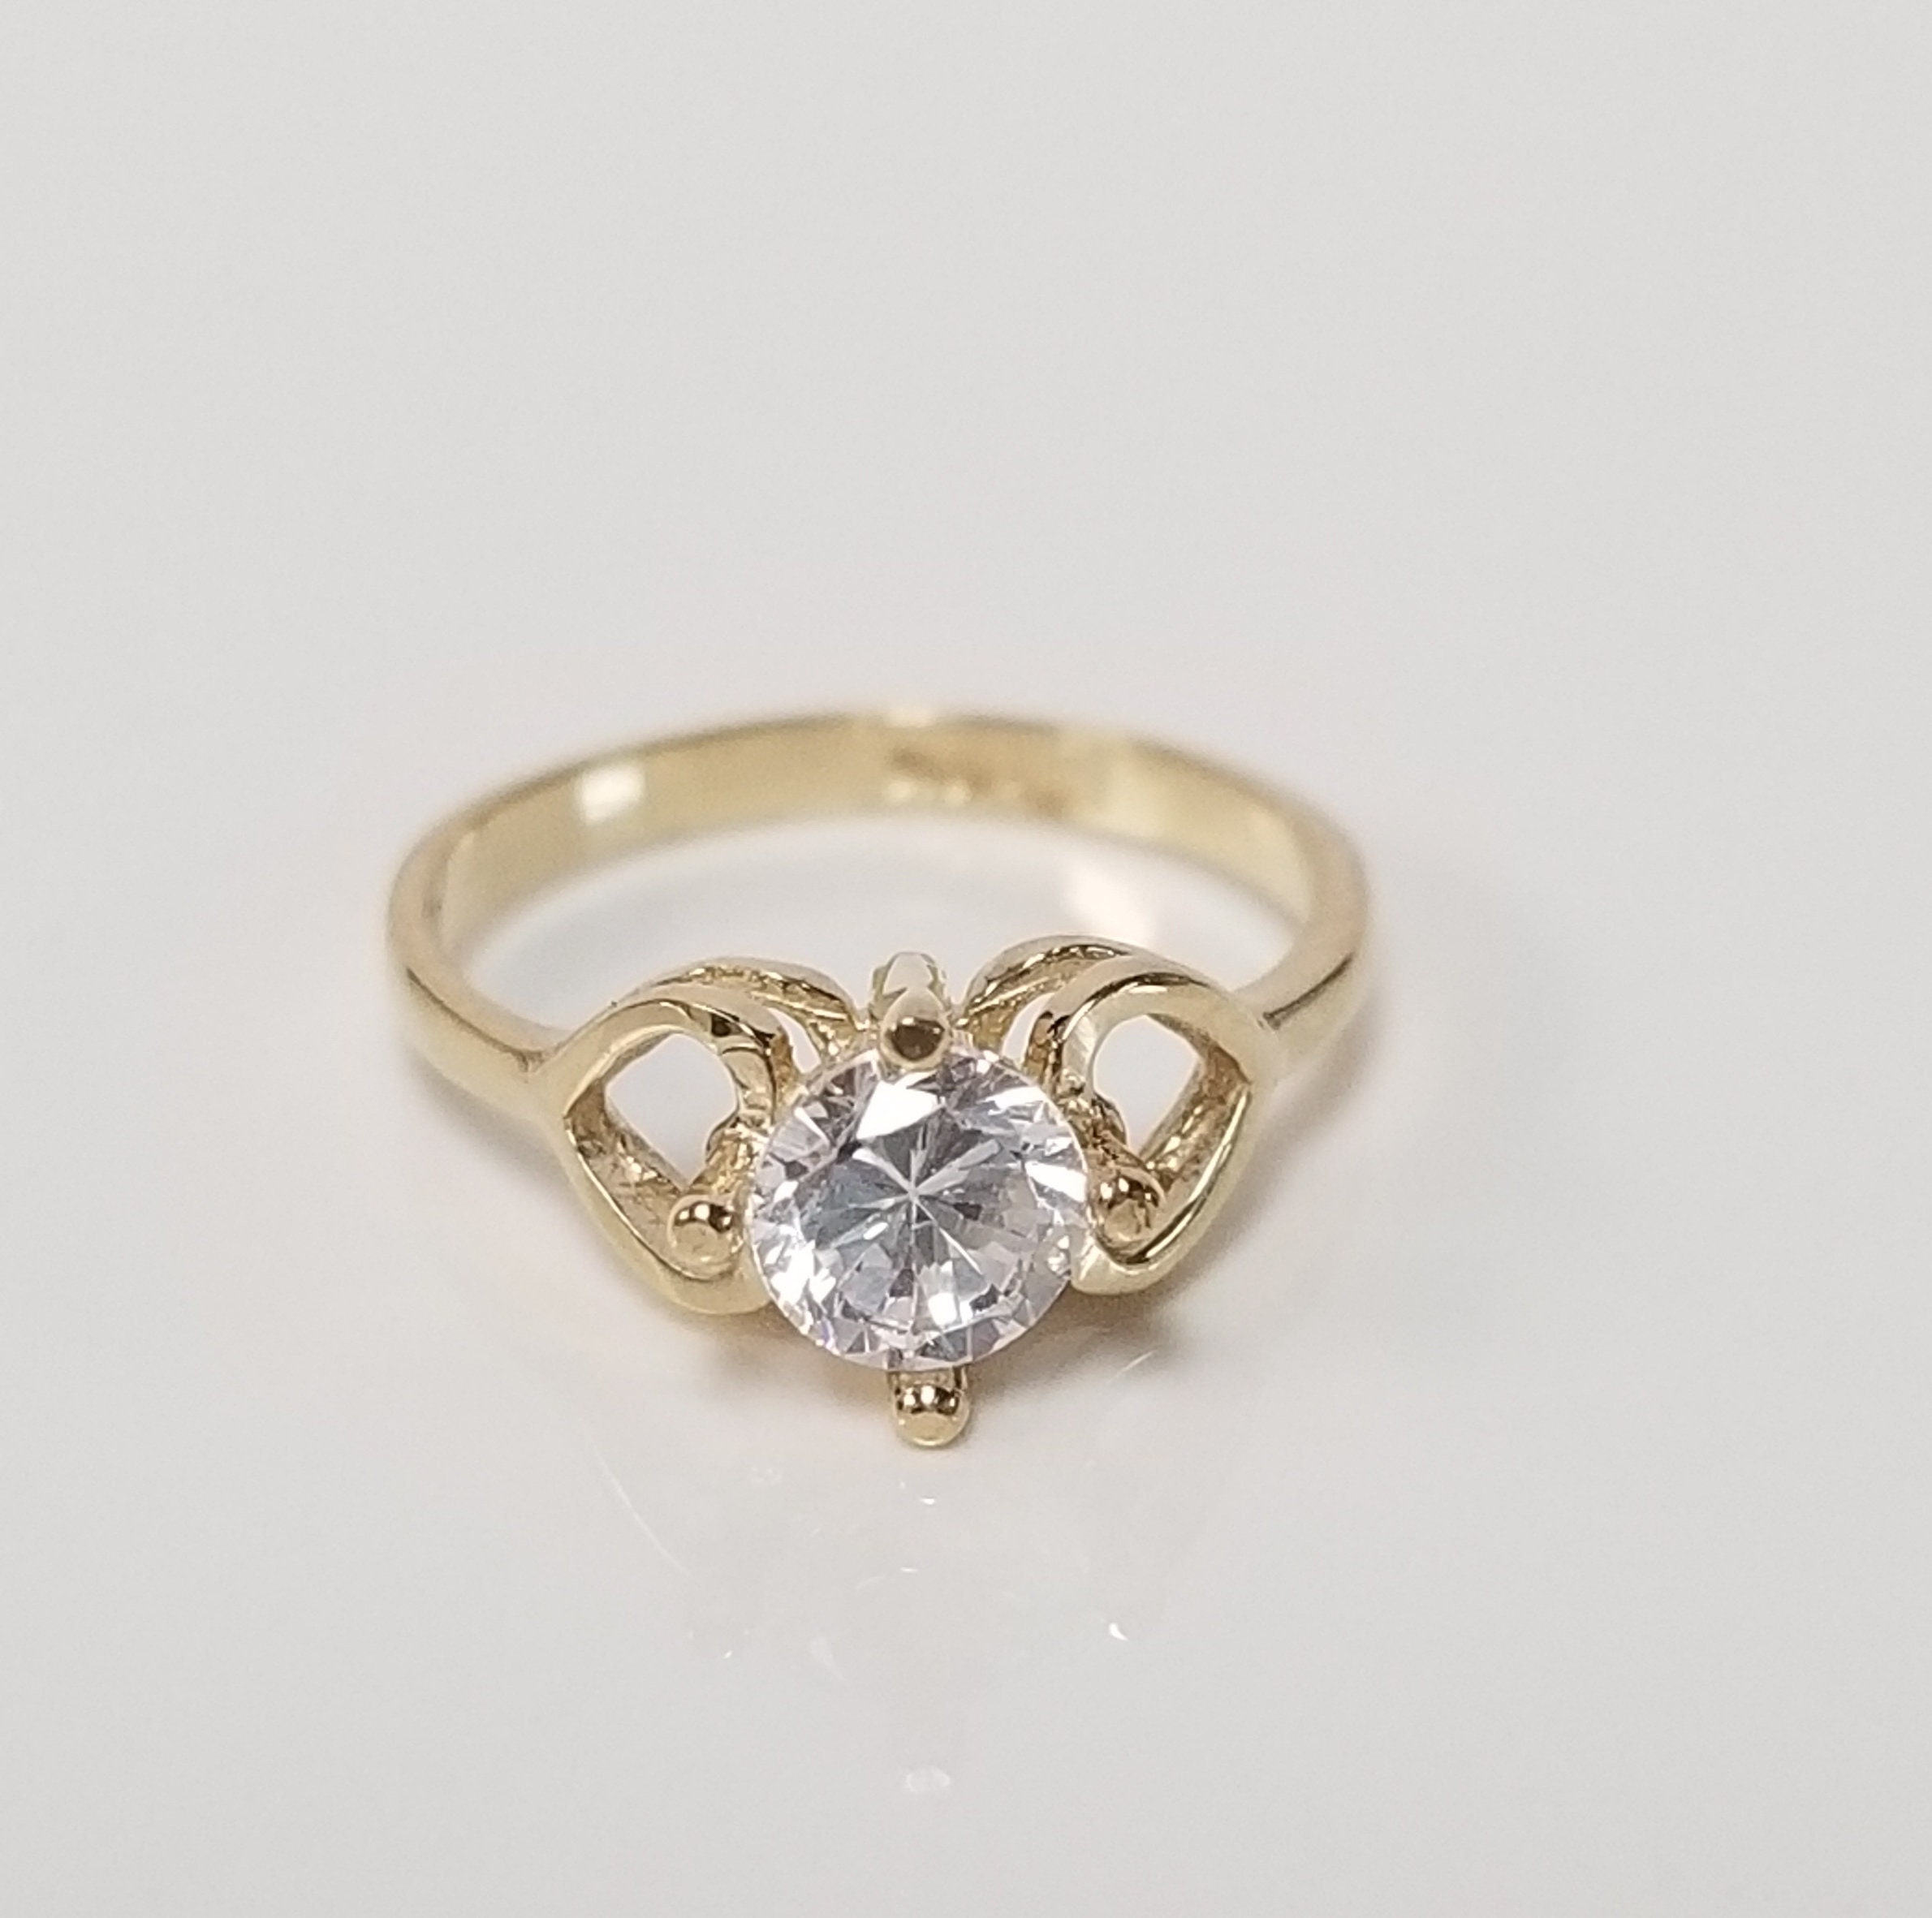 Quality Gold 10k CZ Baby Ring 10C1149 - Central Diamond Center